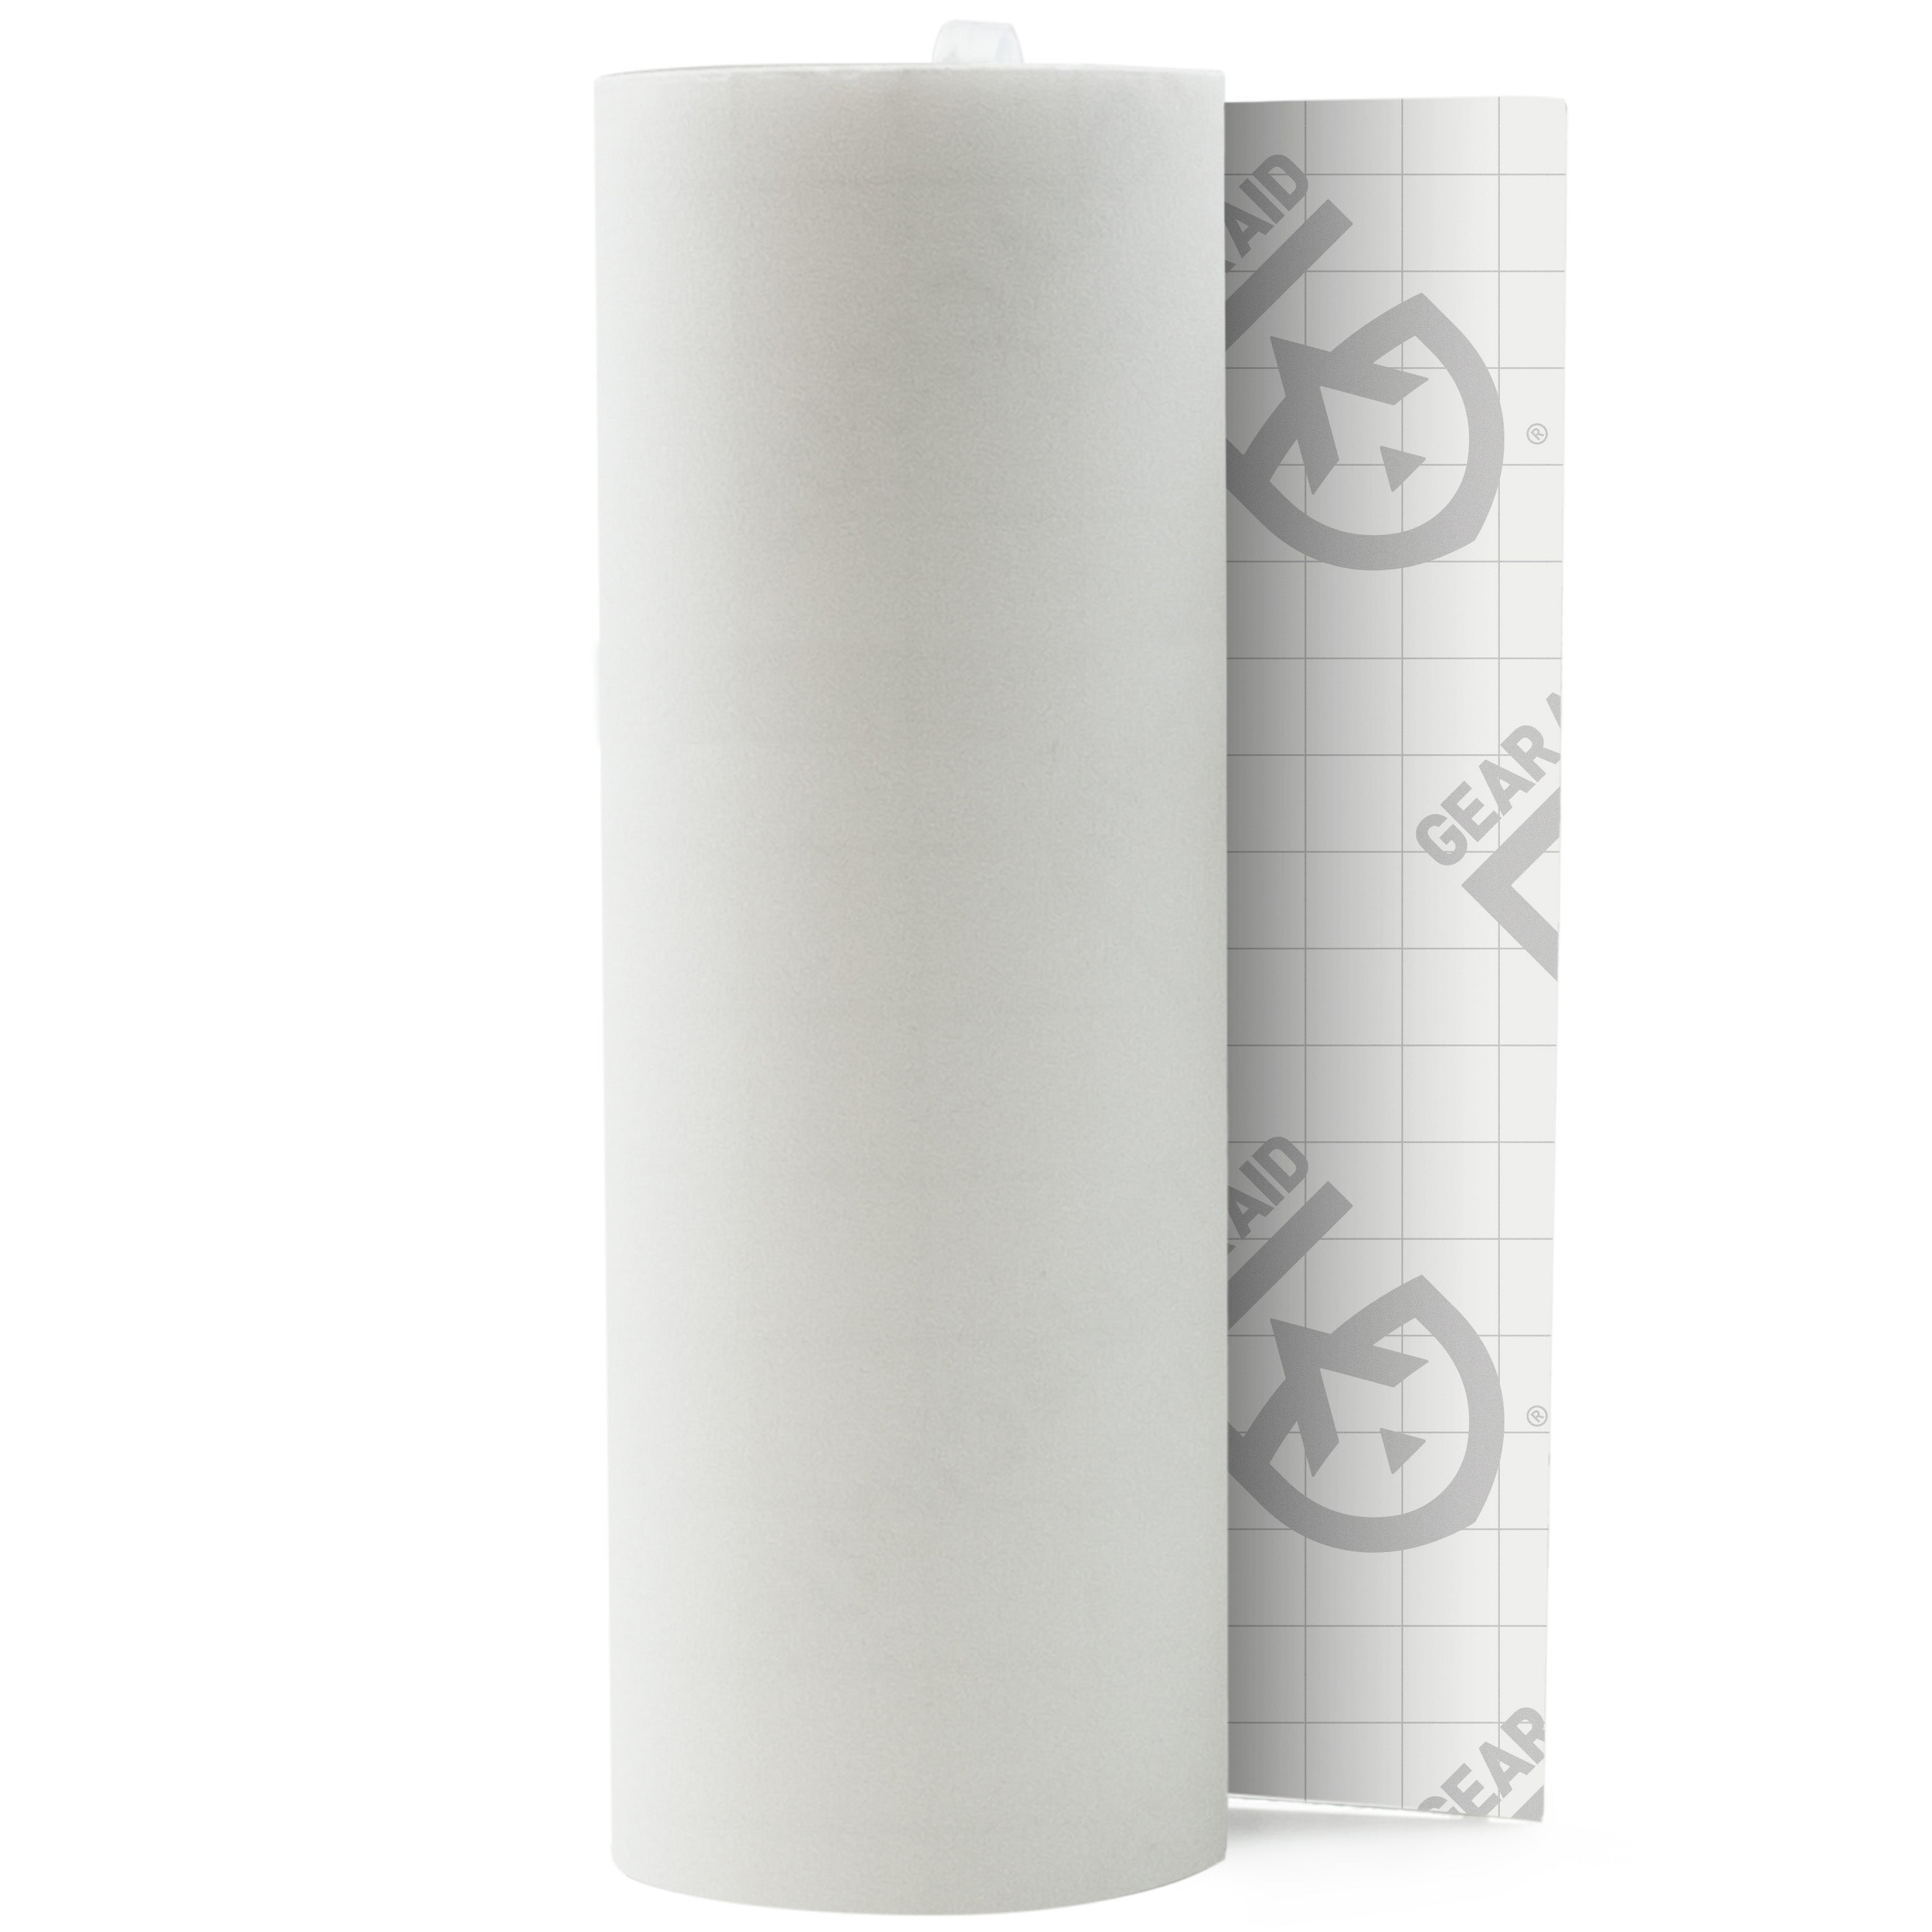 Tenacious Tape™ Reflective Fabric Tape